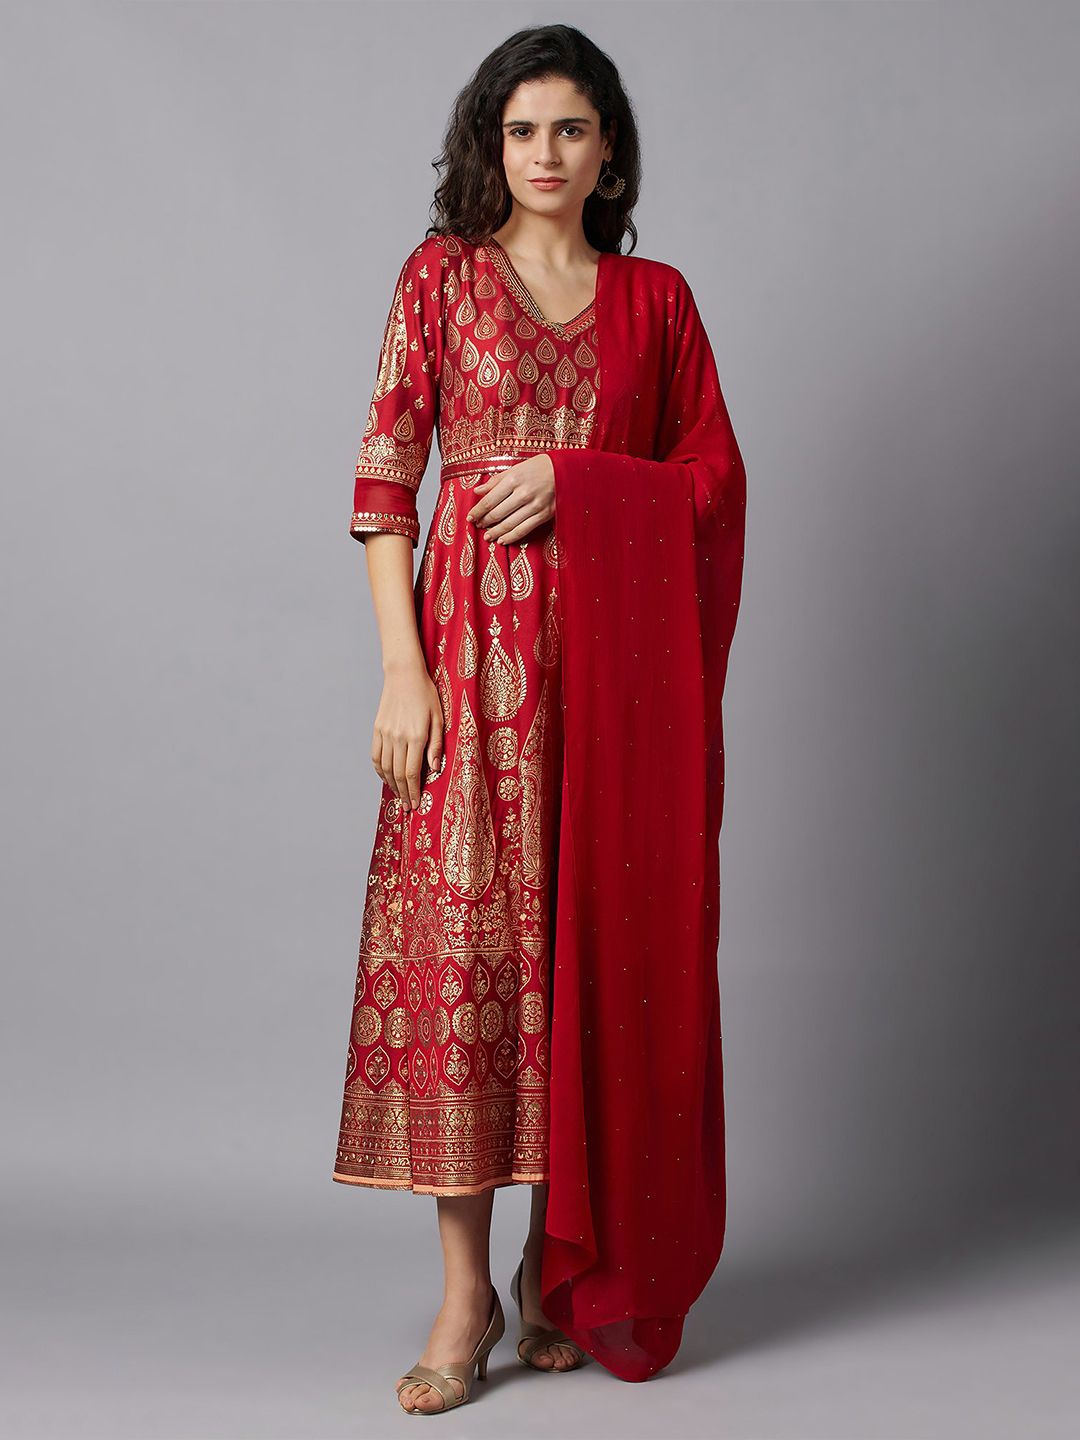 AURELIA Red Ethnic Motifs Printed Maxi Dress with Dupatta Price in India